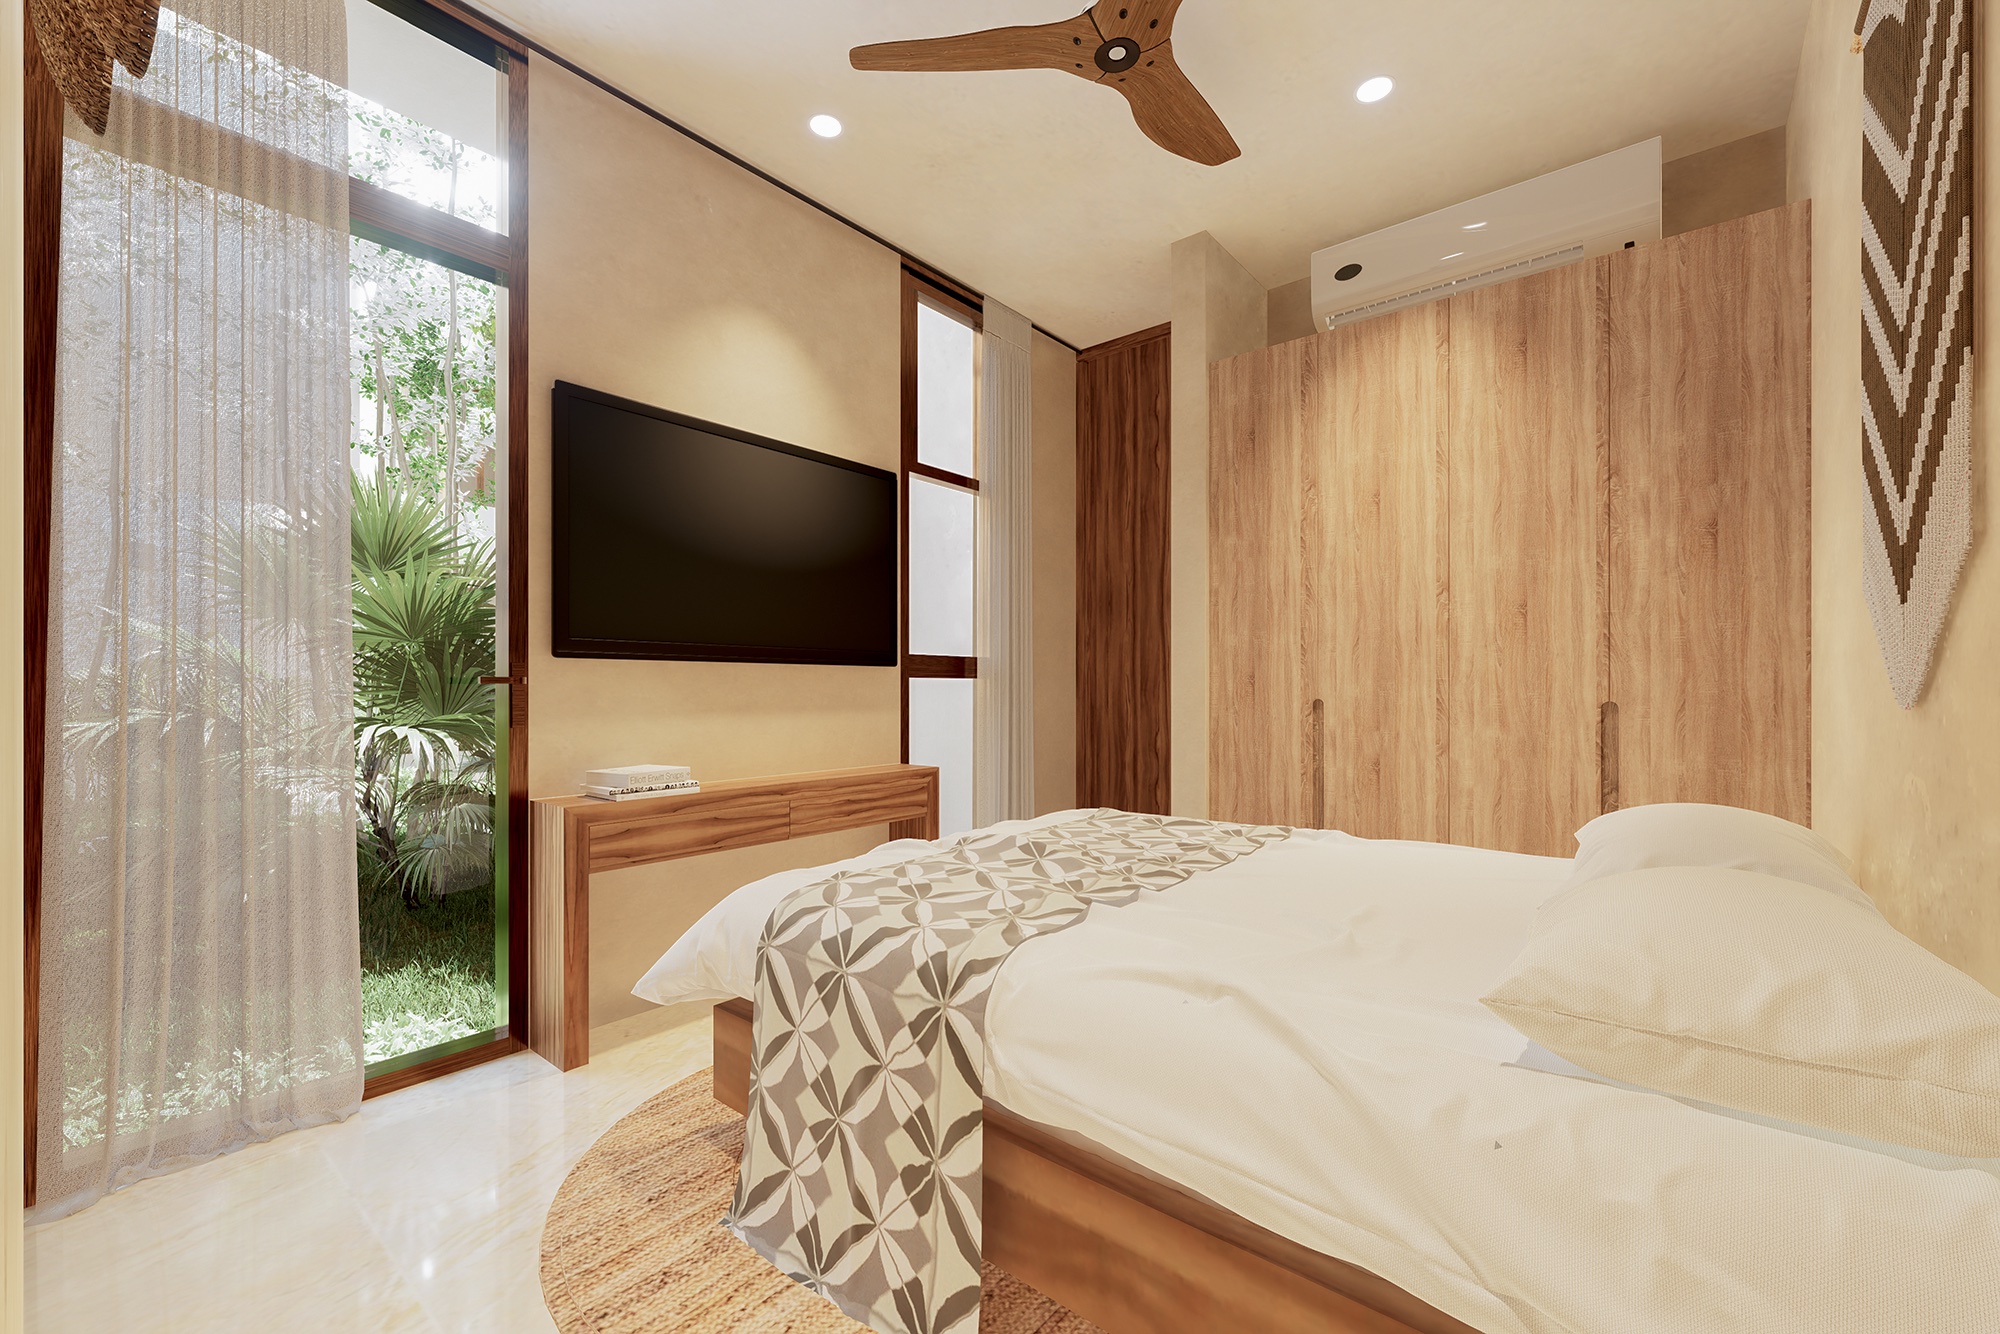 luxury villas for sale in tulum mexico 083 type b bedroom